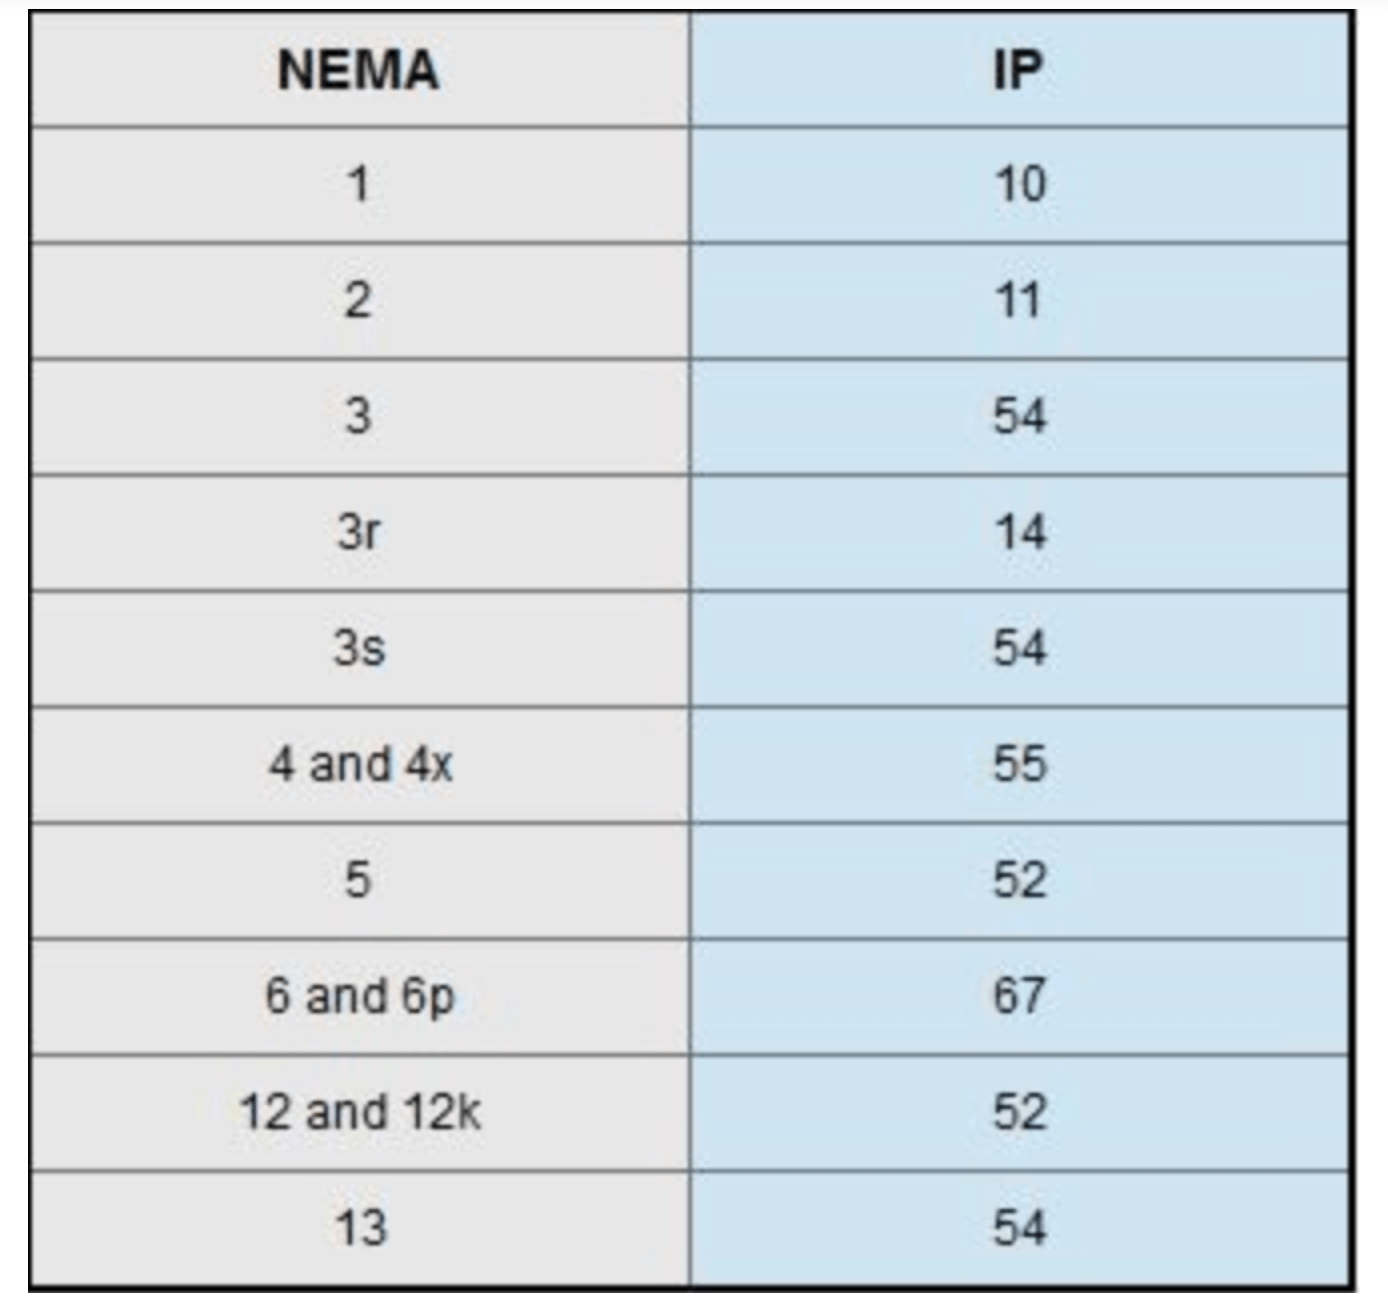 NEMA and IP ratings